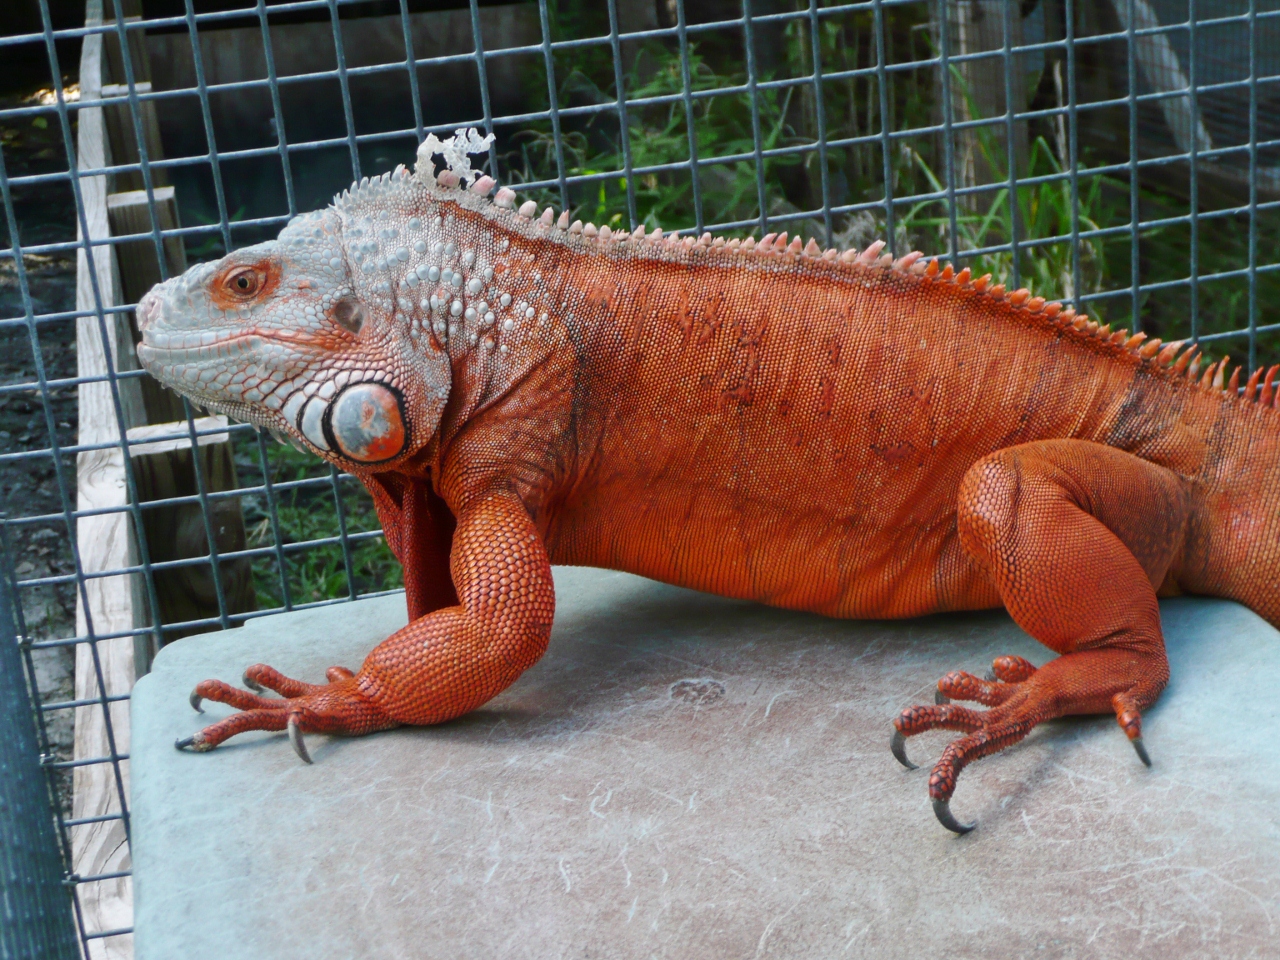 Photos of Iguanas Super Red.